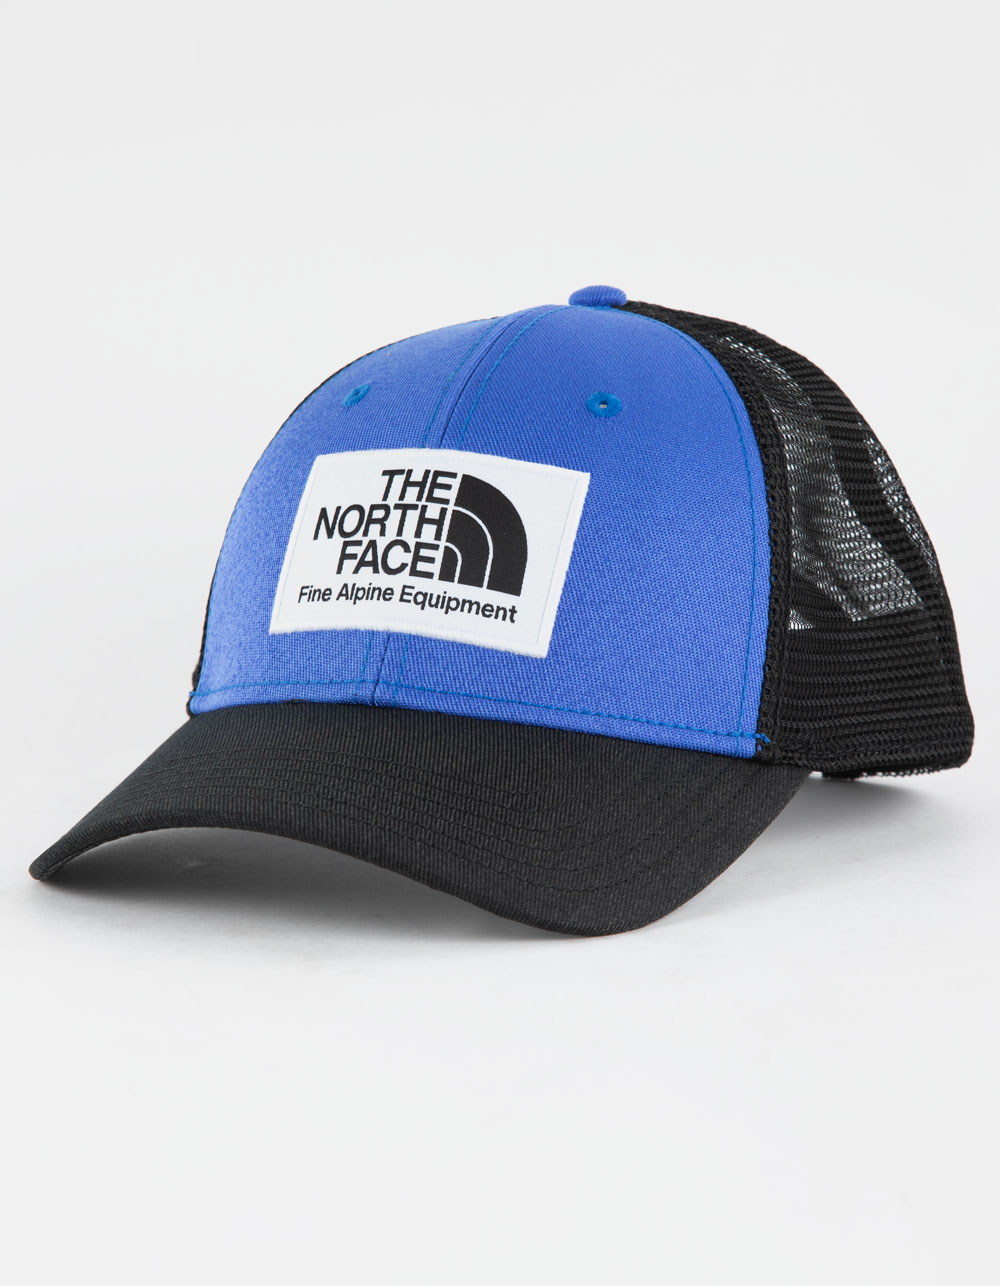 THE NORTH FACE Mudder Mens Trucker Hat